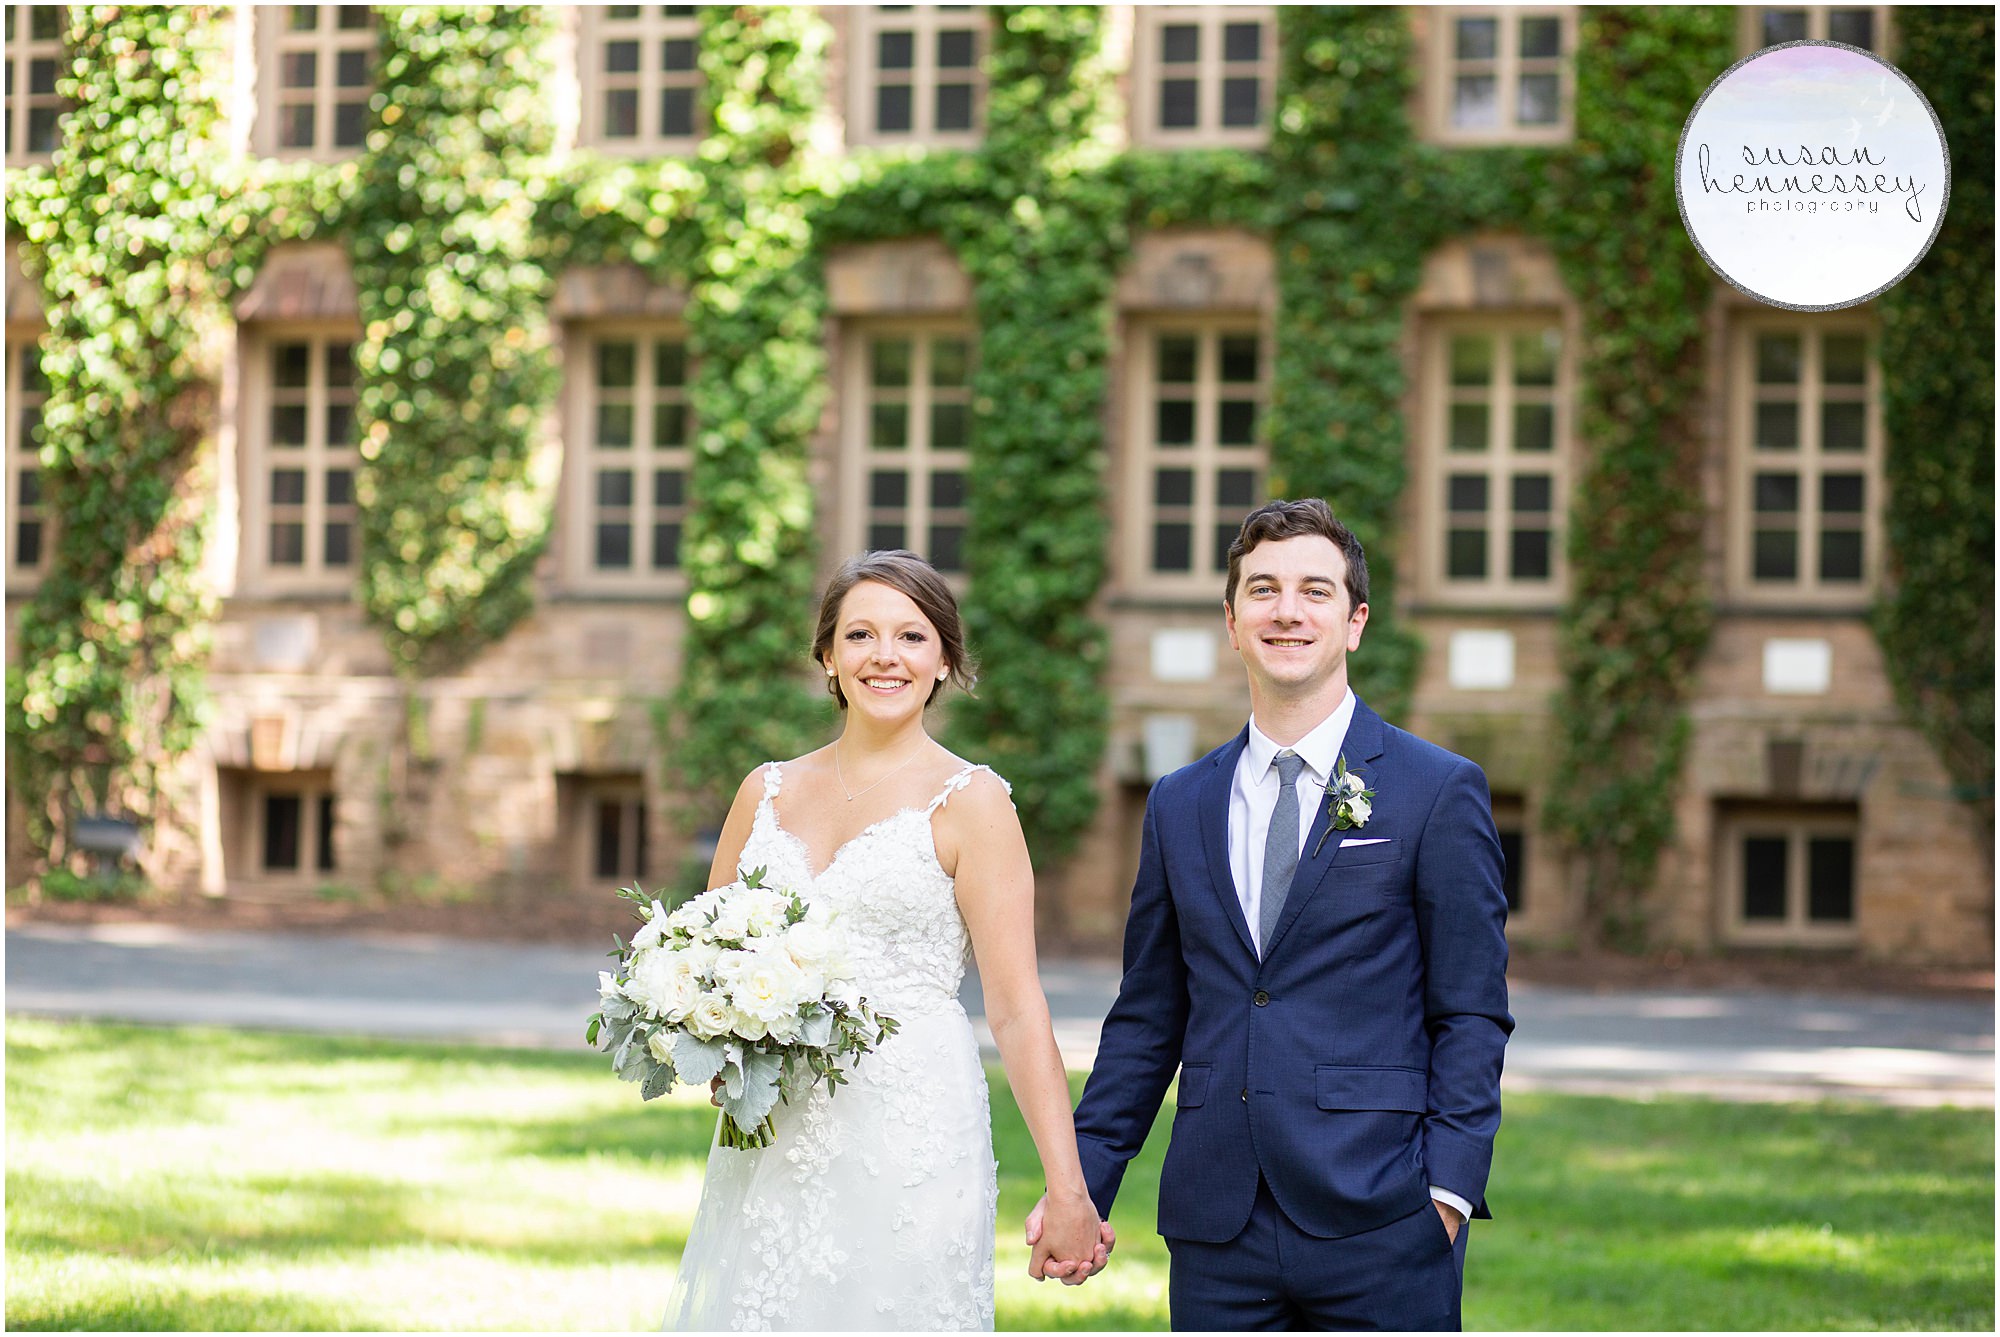 Romantic bride and groom portraits at Princeton University.